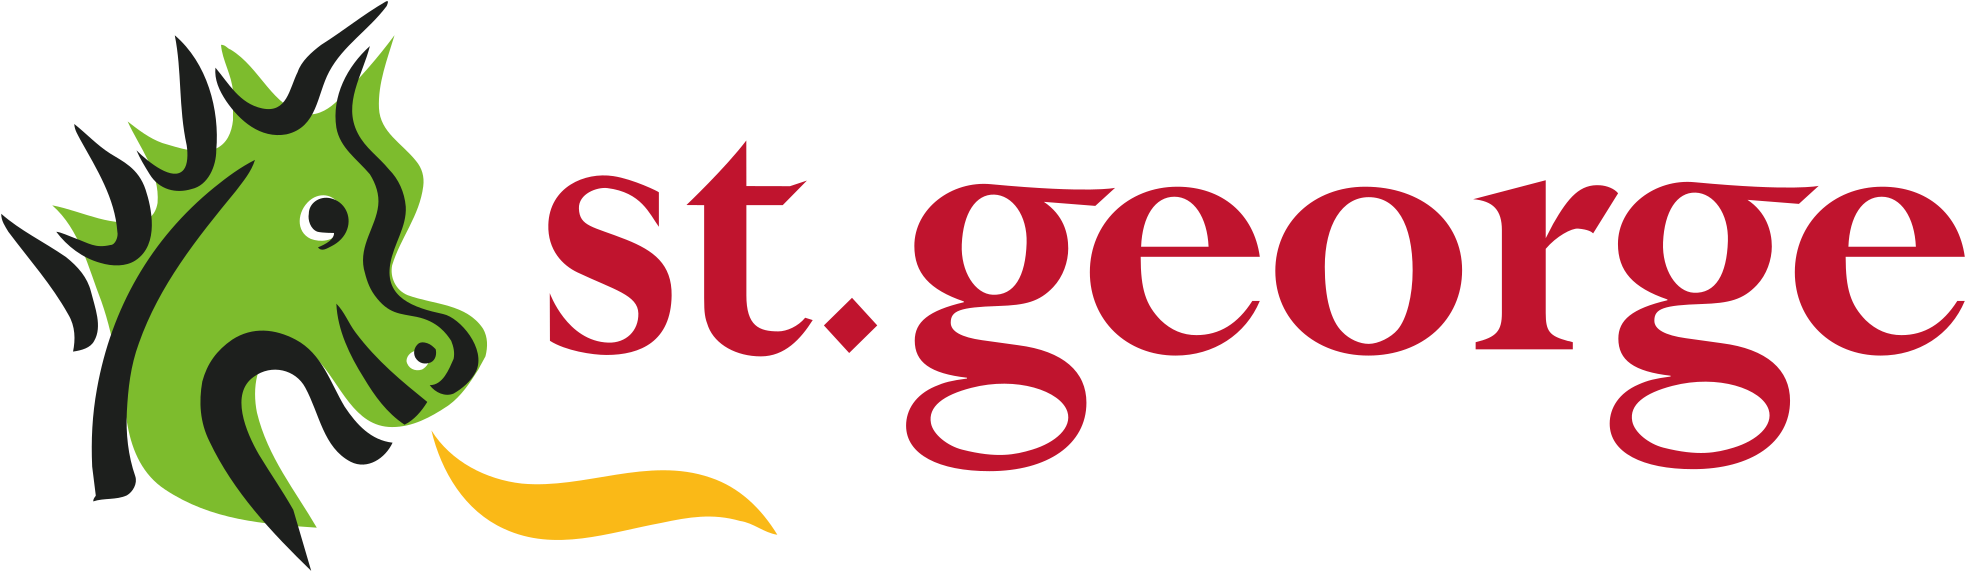 George Bank Logo - St George Bank Logo (2000x604)